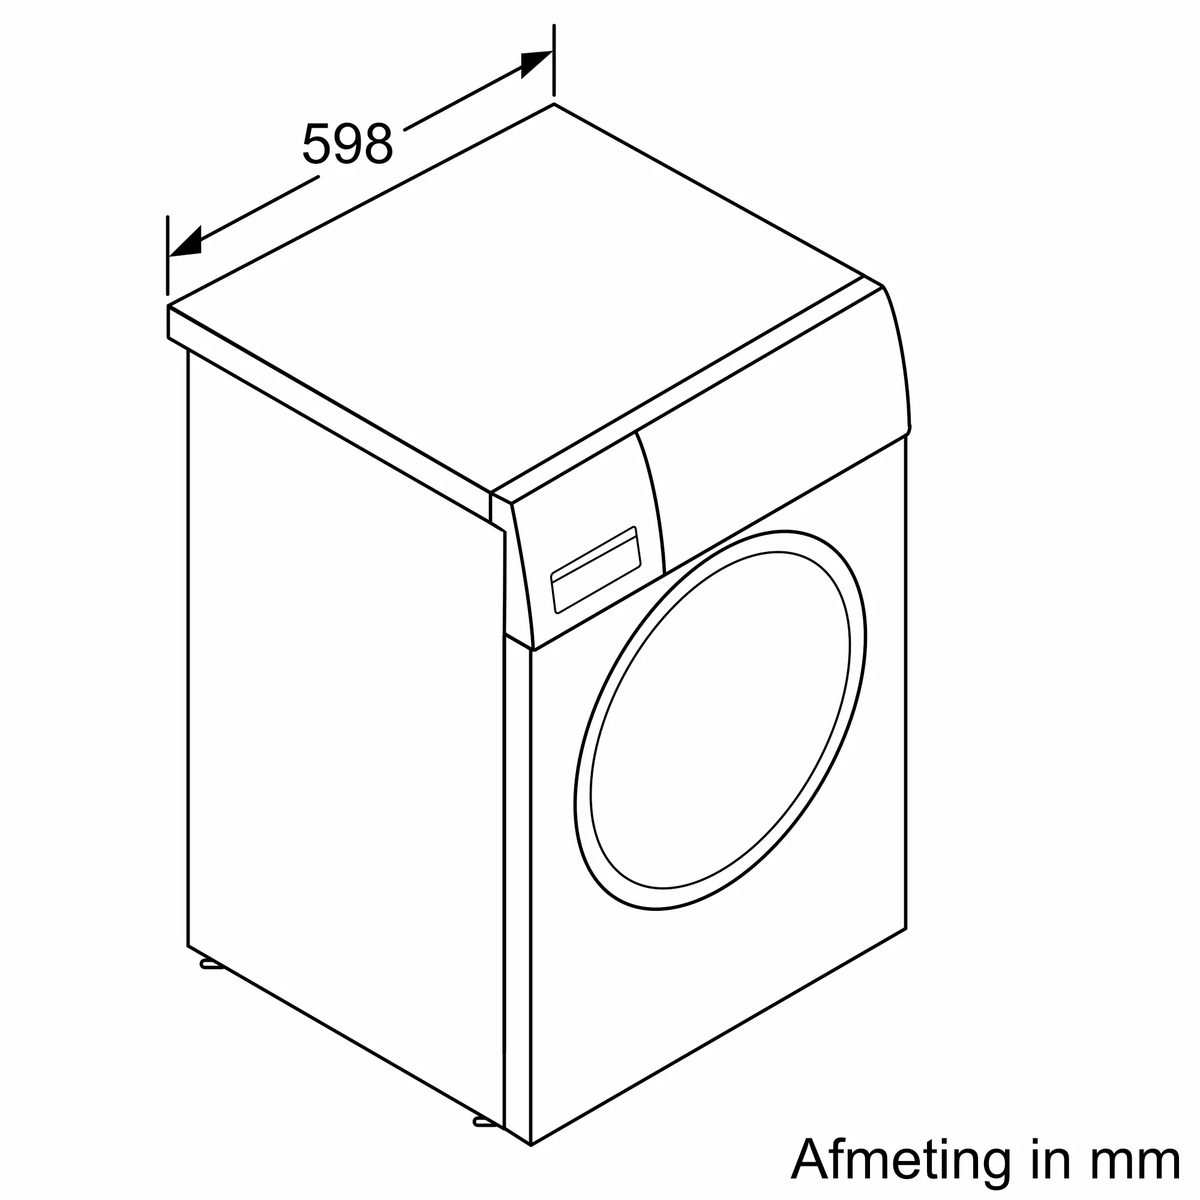 Siemens WM14N277NL Wasmachine met aquastop